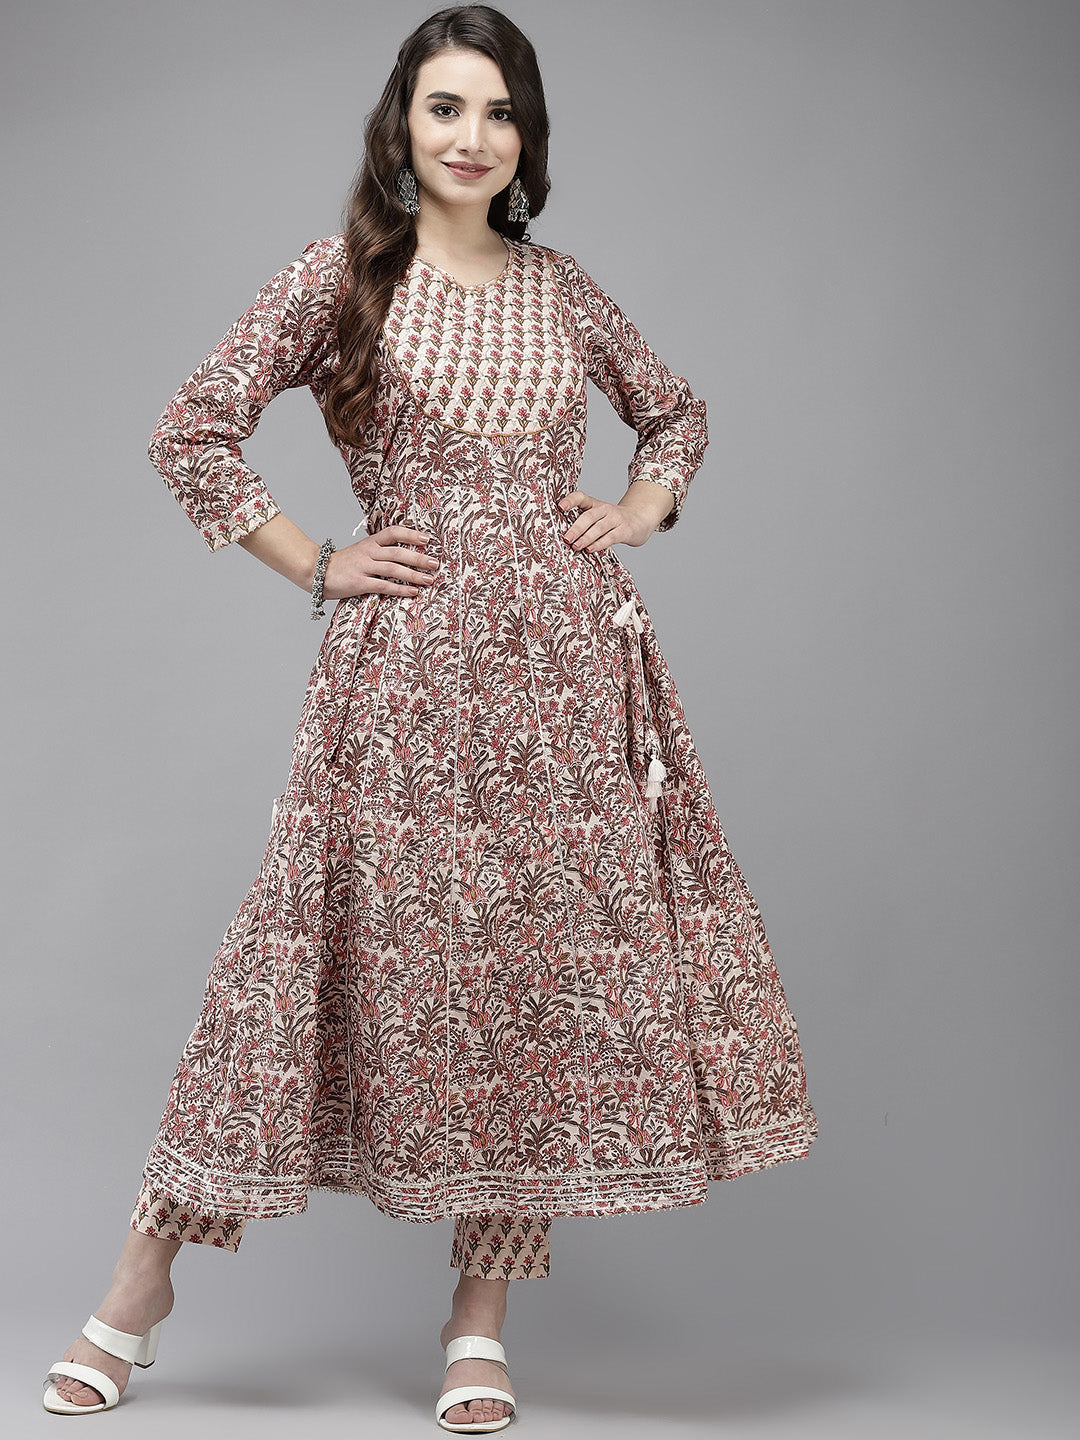 Ishin Women's Cotton Off White Embroidered Anarkali Kurta Trouser Set